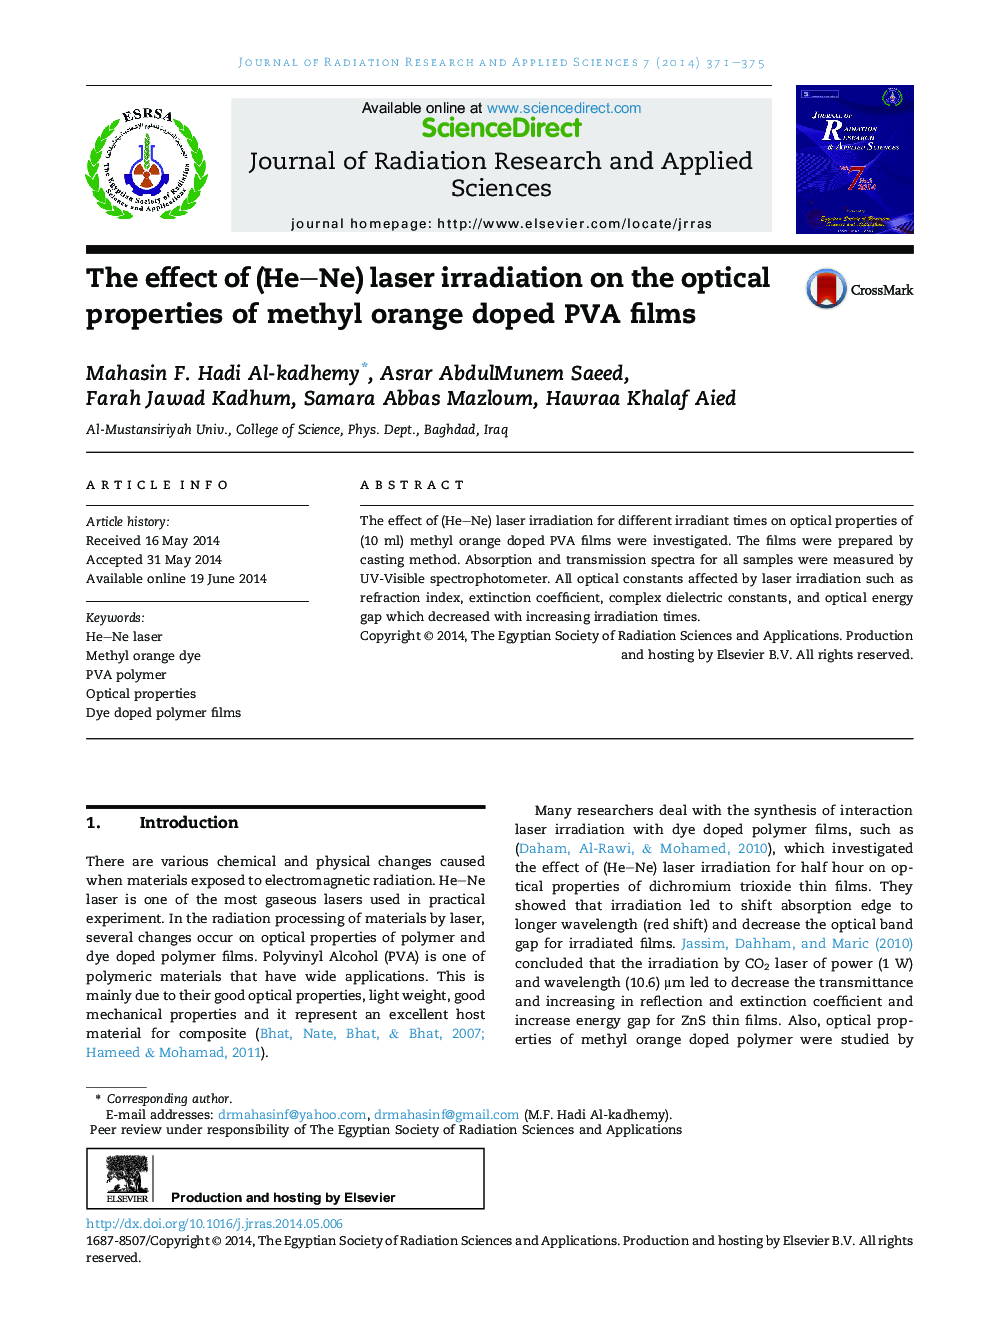 The effect of (He–Ne) laser irradiation on the optical properties of methyl orange doped PVA films 